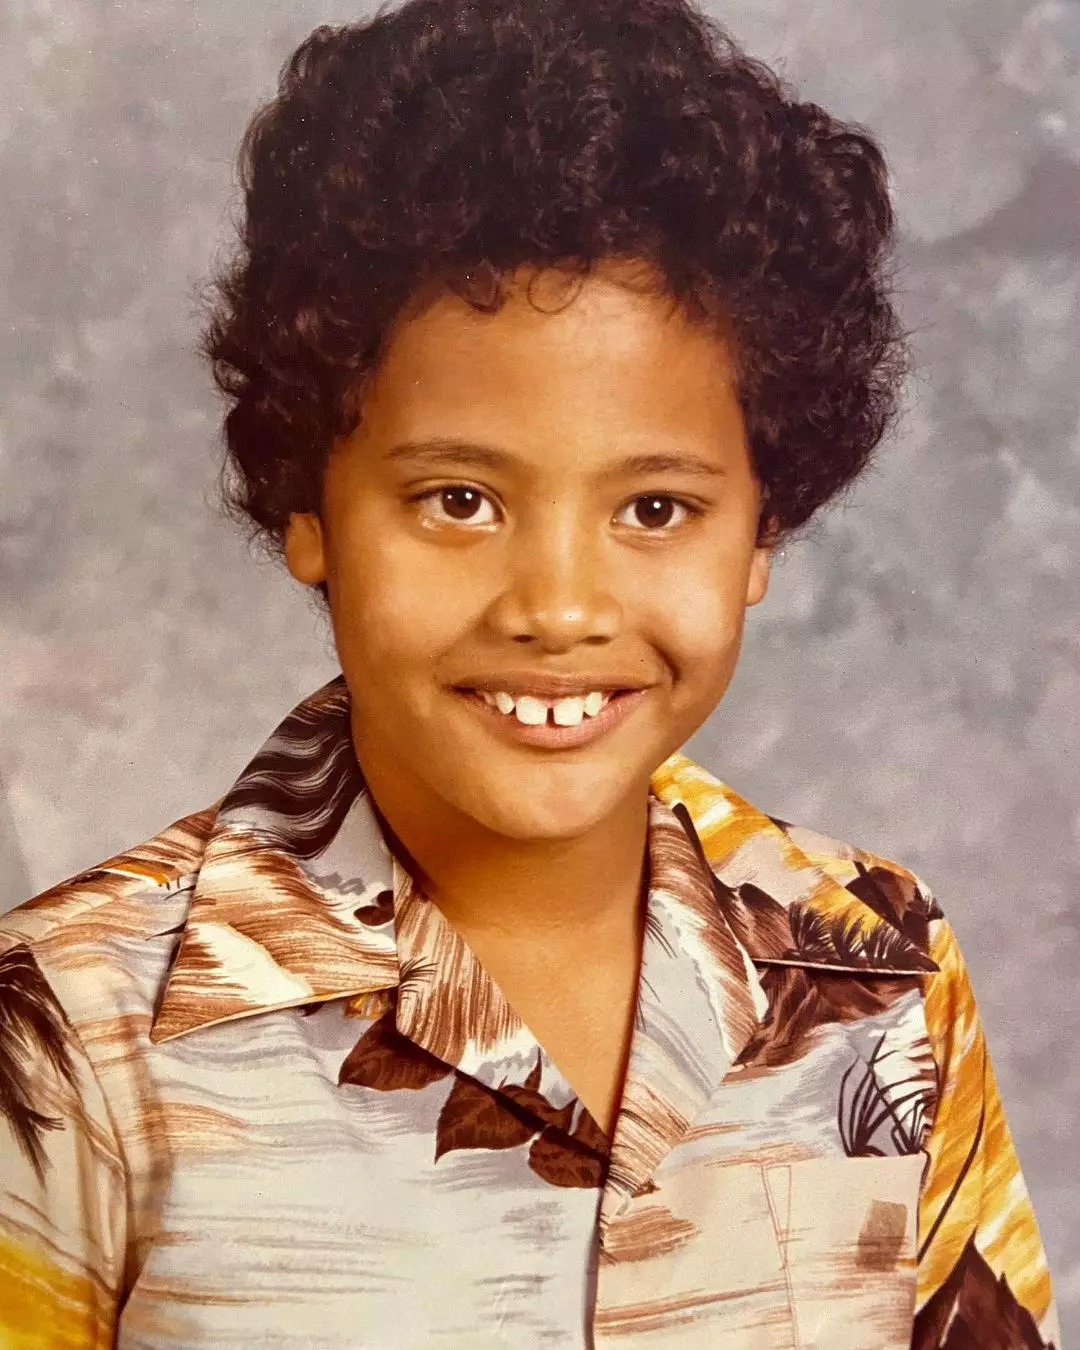 Dwayne Johnson aged seven.